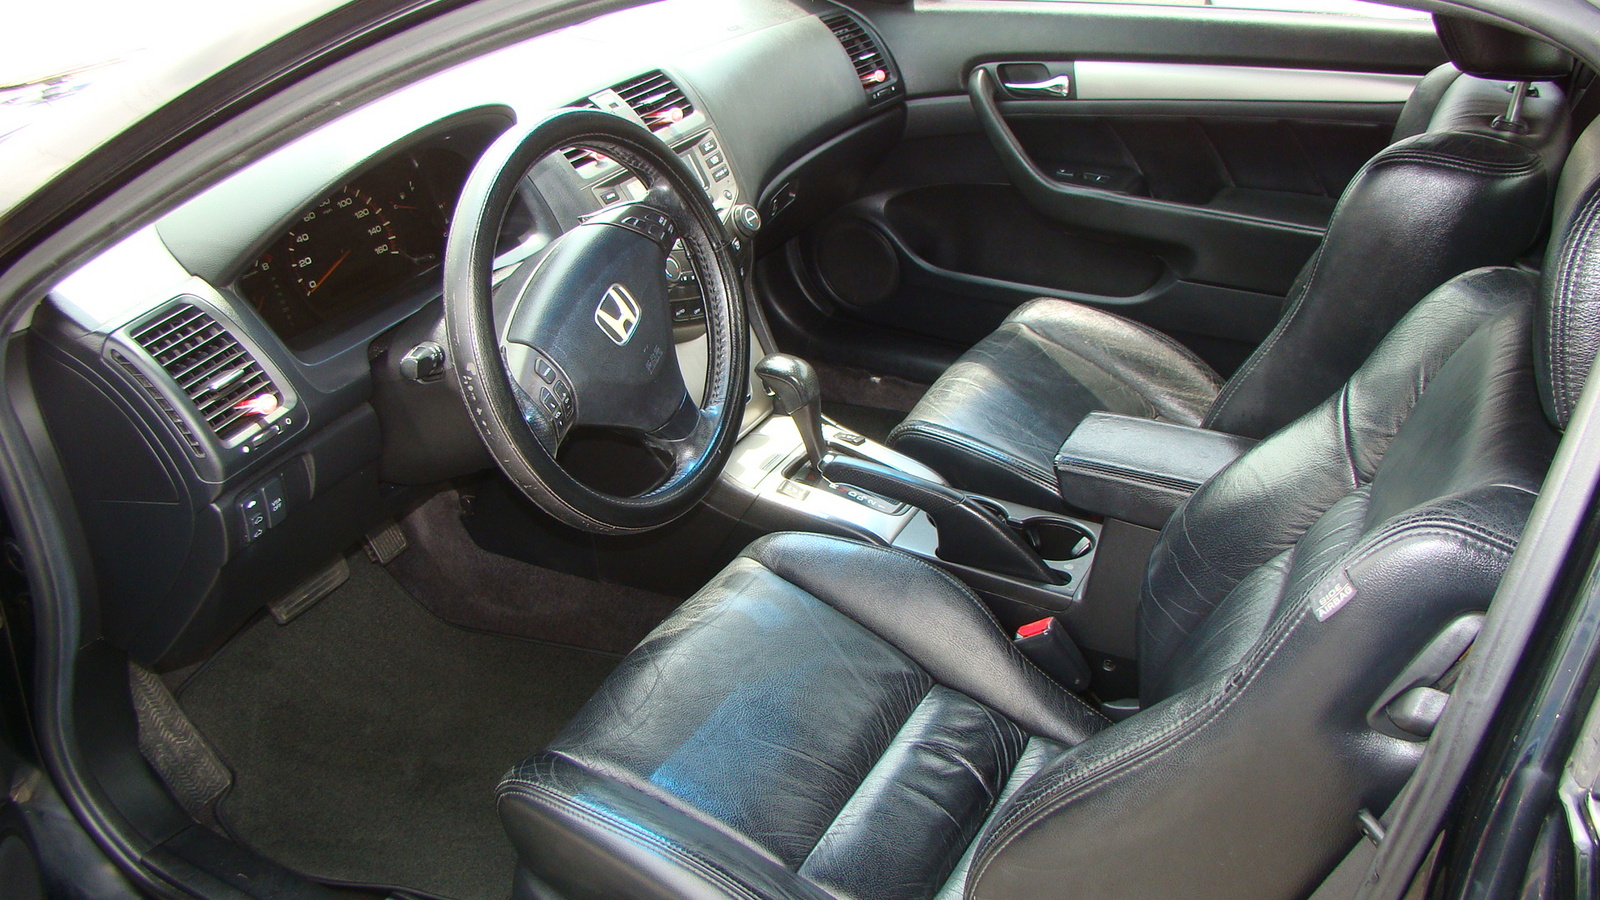 2006 Honda accord leather interior #4